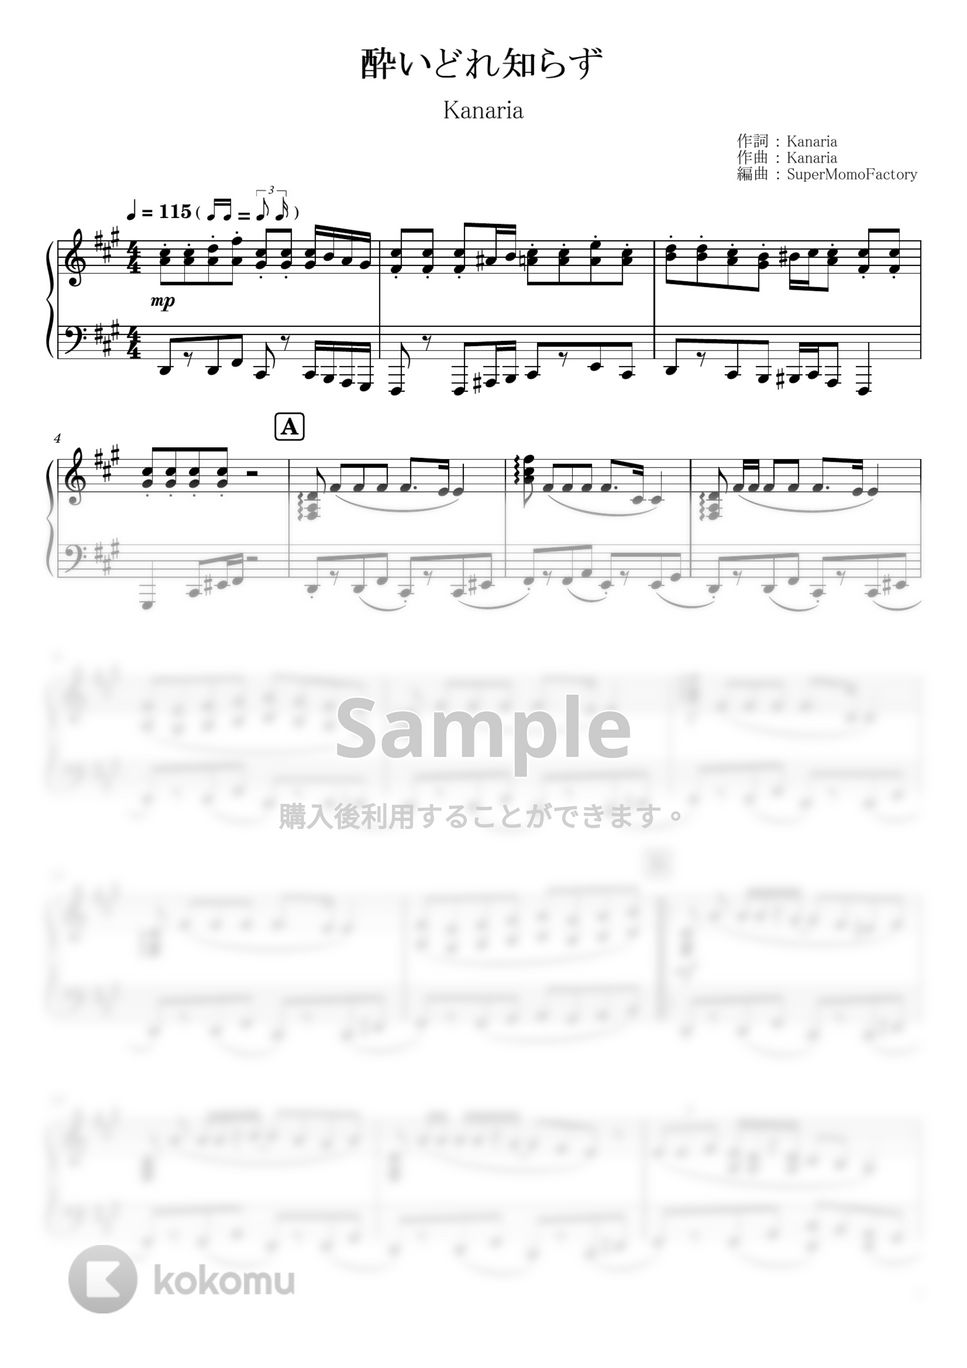 Kanaria - 酔いどれ知らず (ピアノソロ / 中級) by SuperMomoFactory